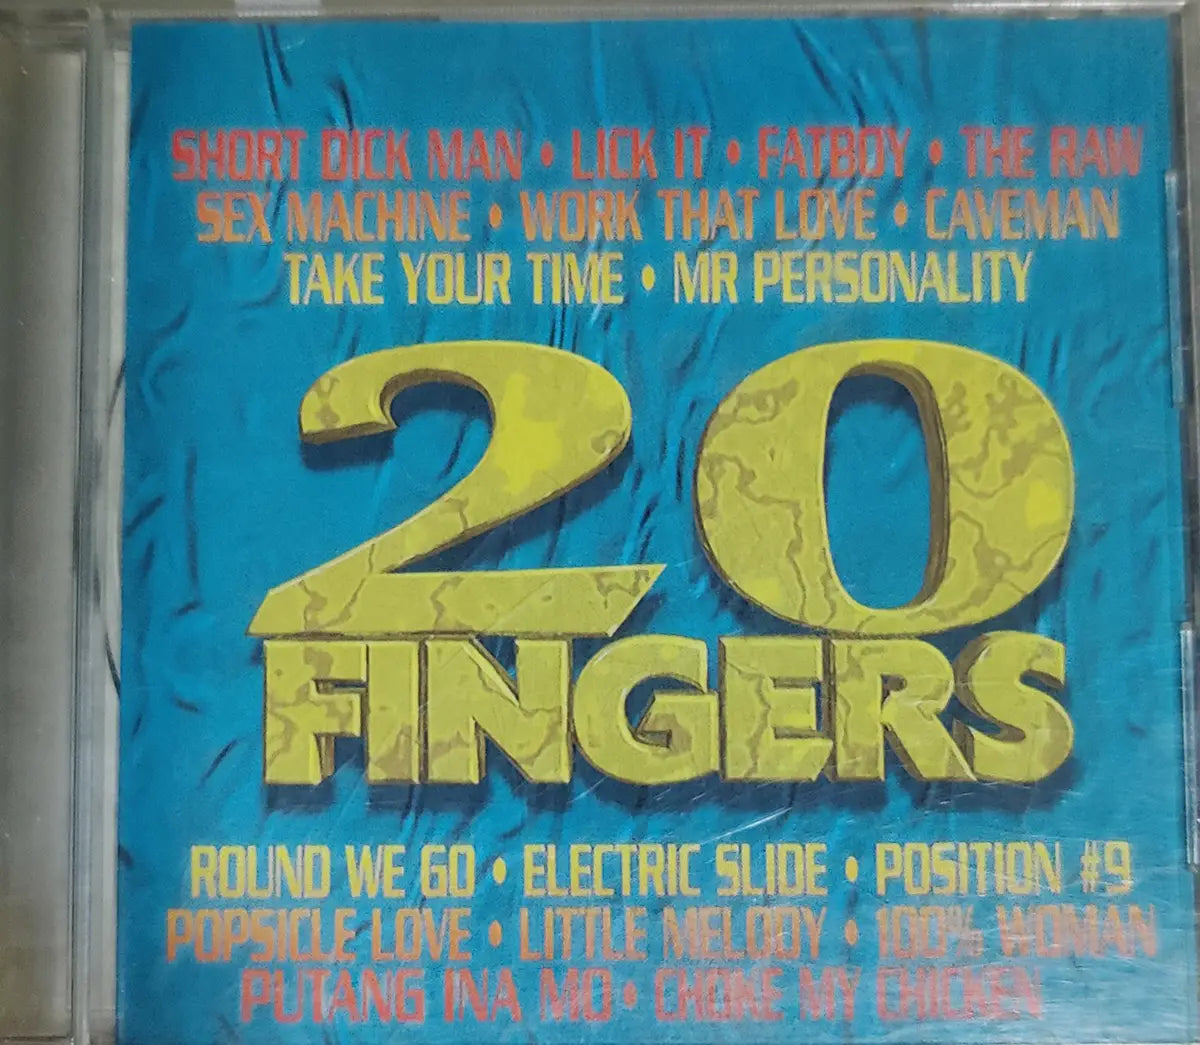 20 Fingers